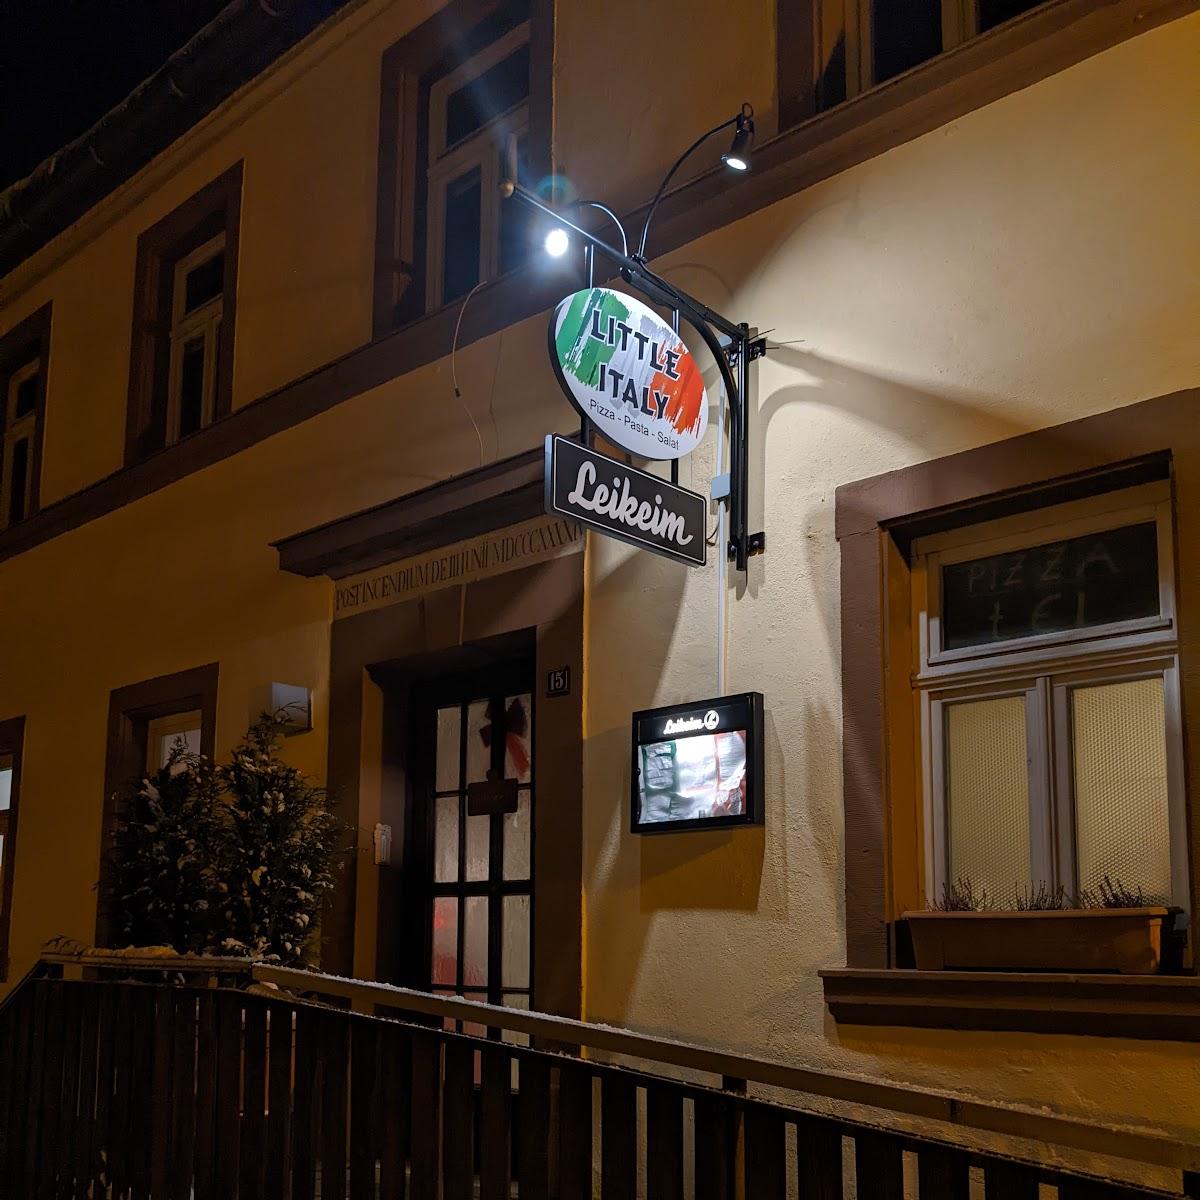 Restaurant "Little Italy" in Teuschnitz